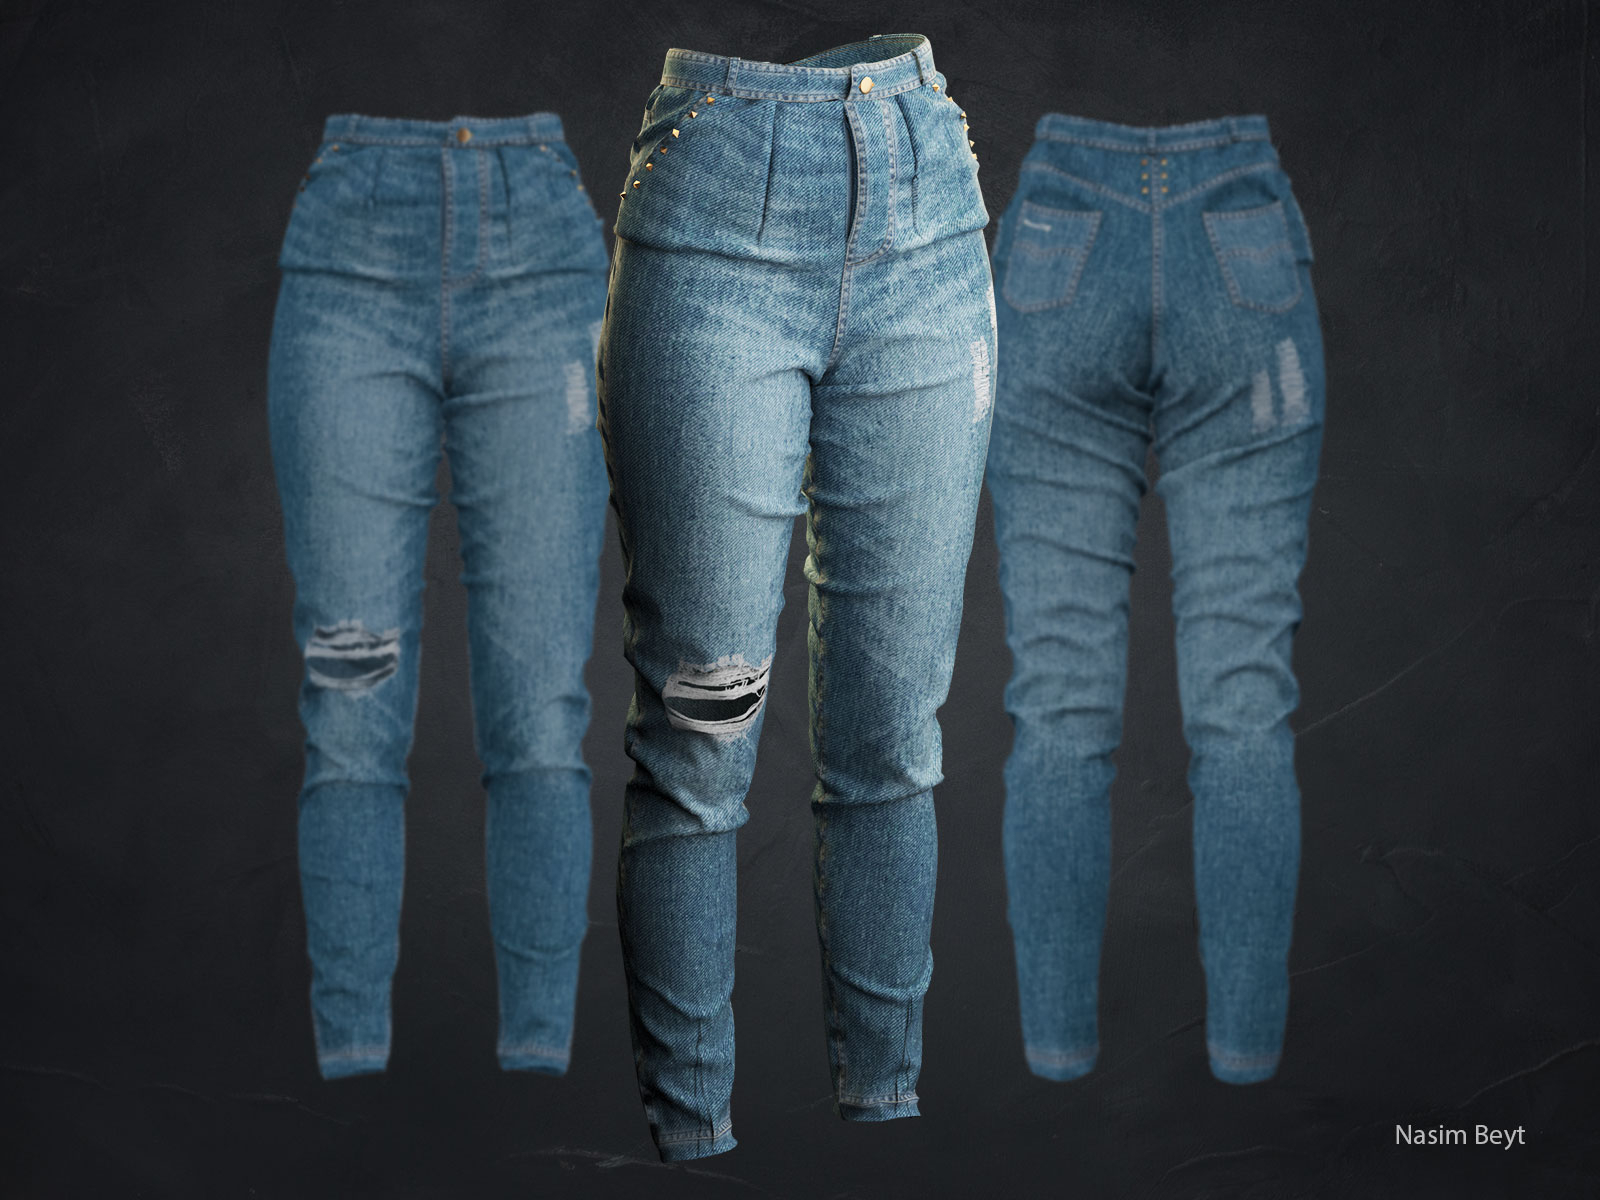 Female Jeans by Nasim Beyt on Dribbble